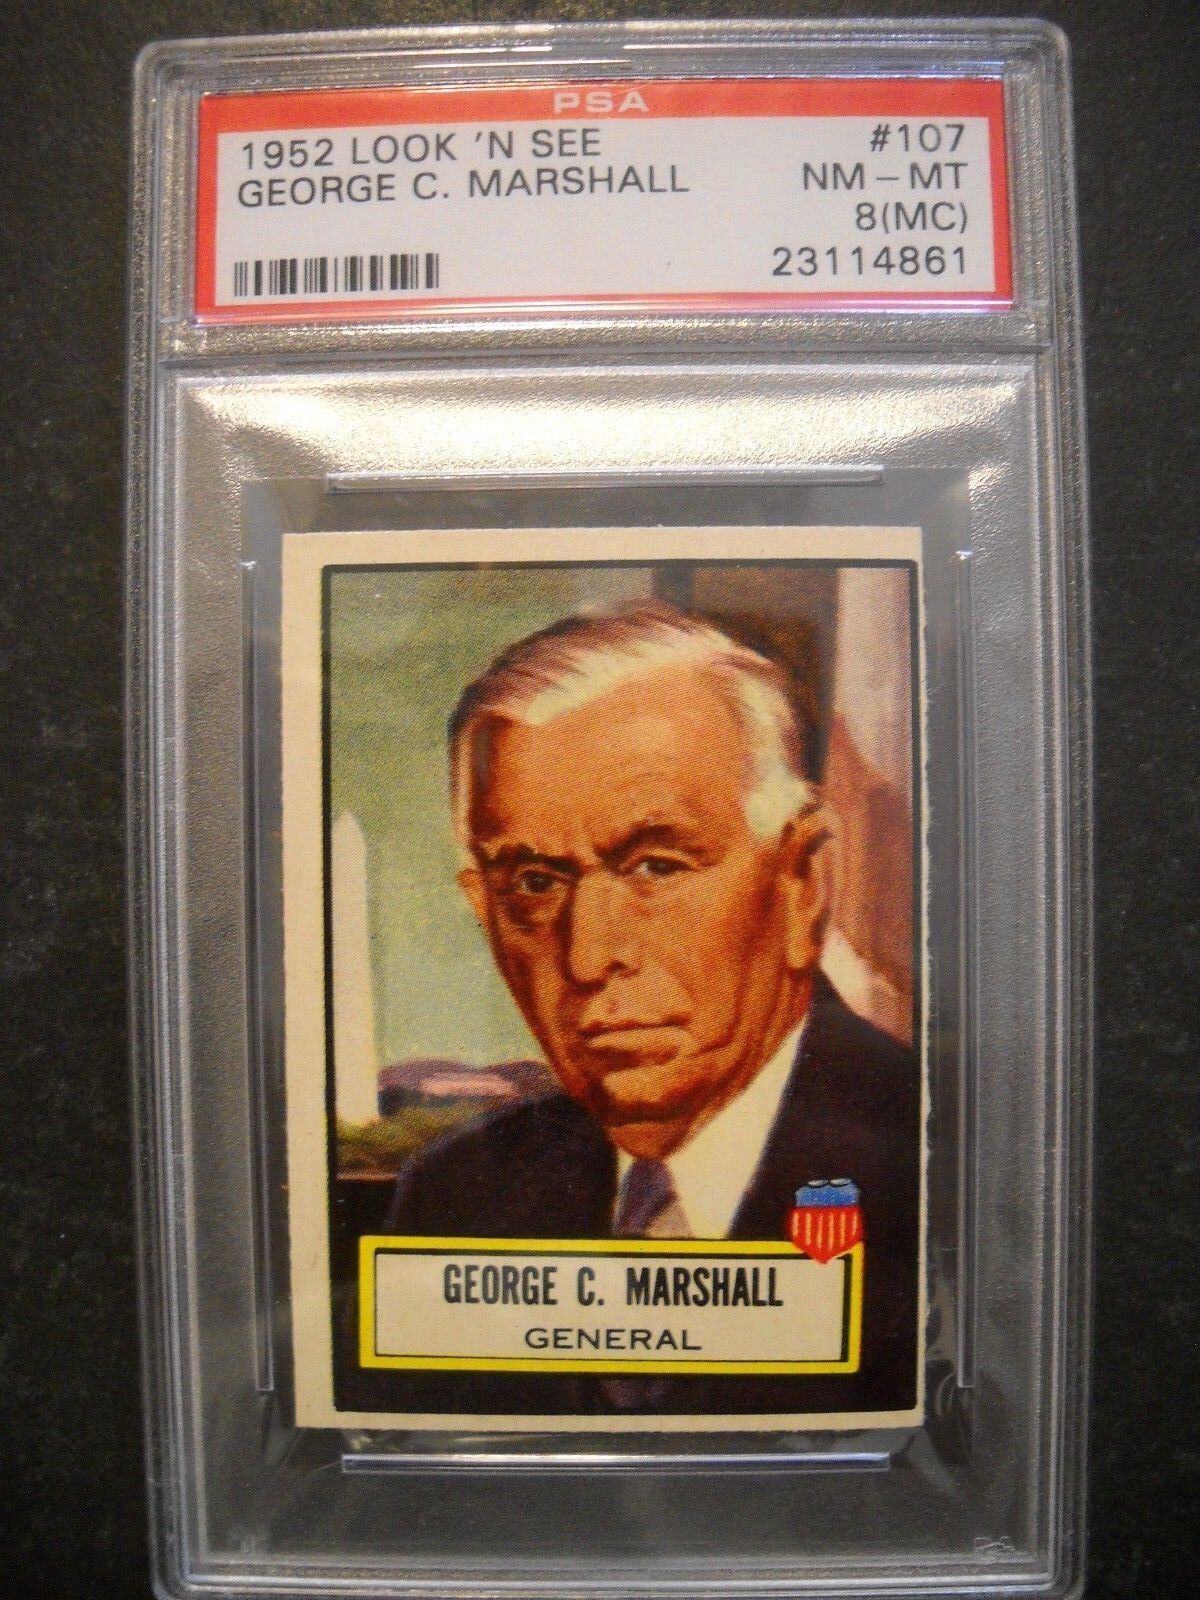 1952 LOOK N SEE CARD #107 MARSHALL TOPPS  (GRADED PSA 8 MC)